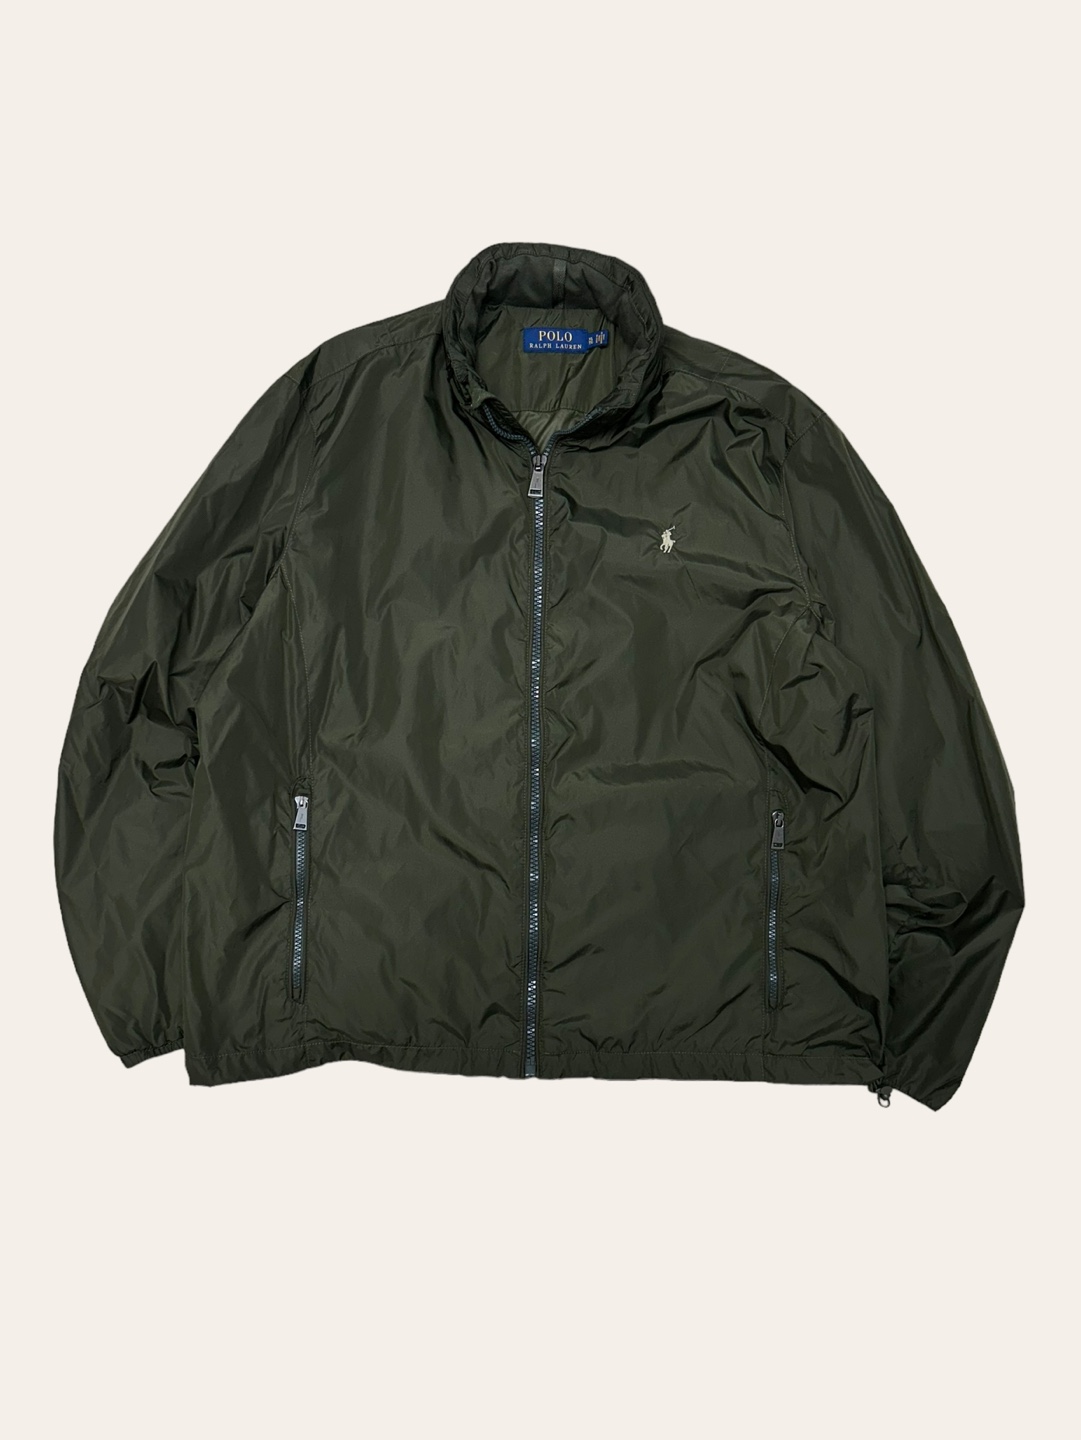 Polo ralph lauren olive green nylon windbreaker jacket XL